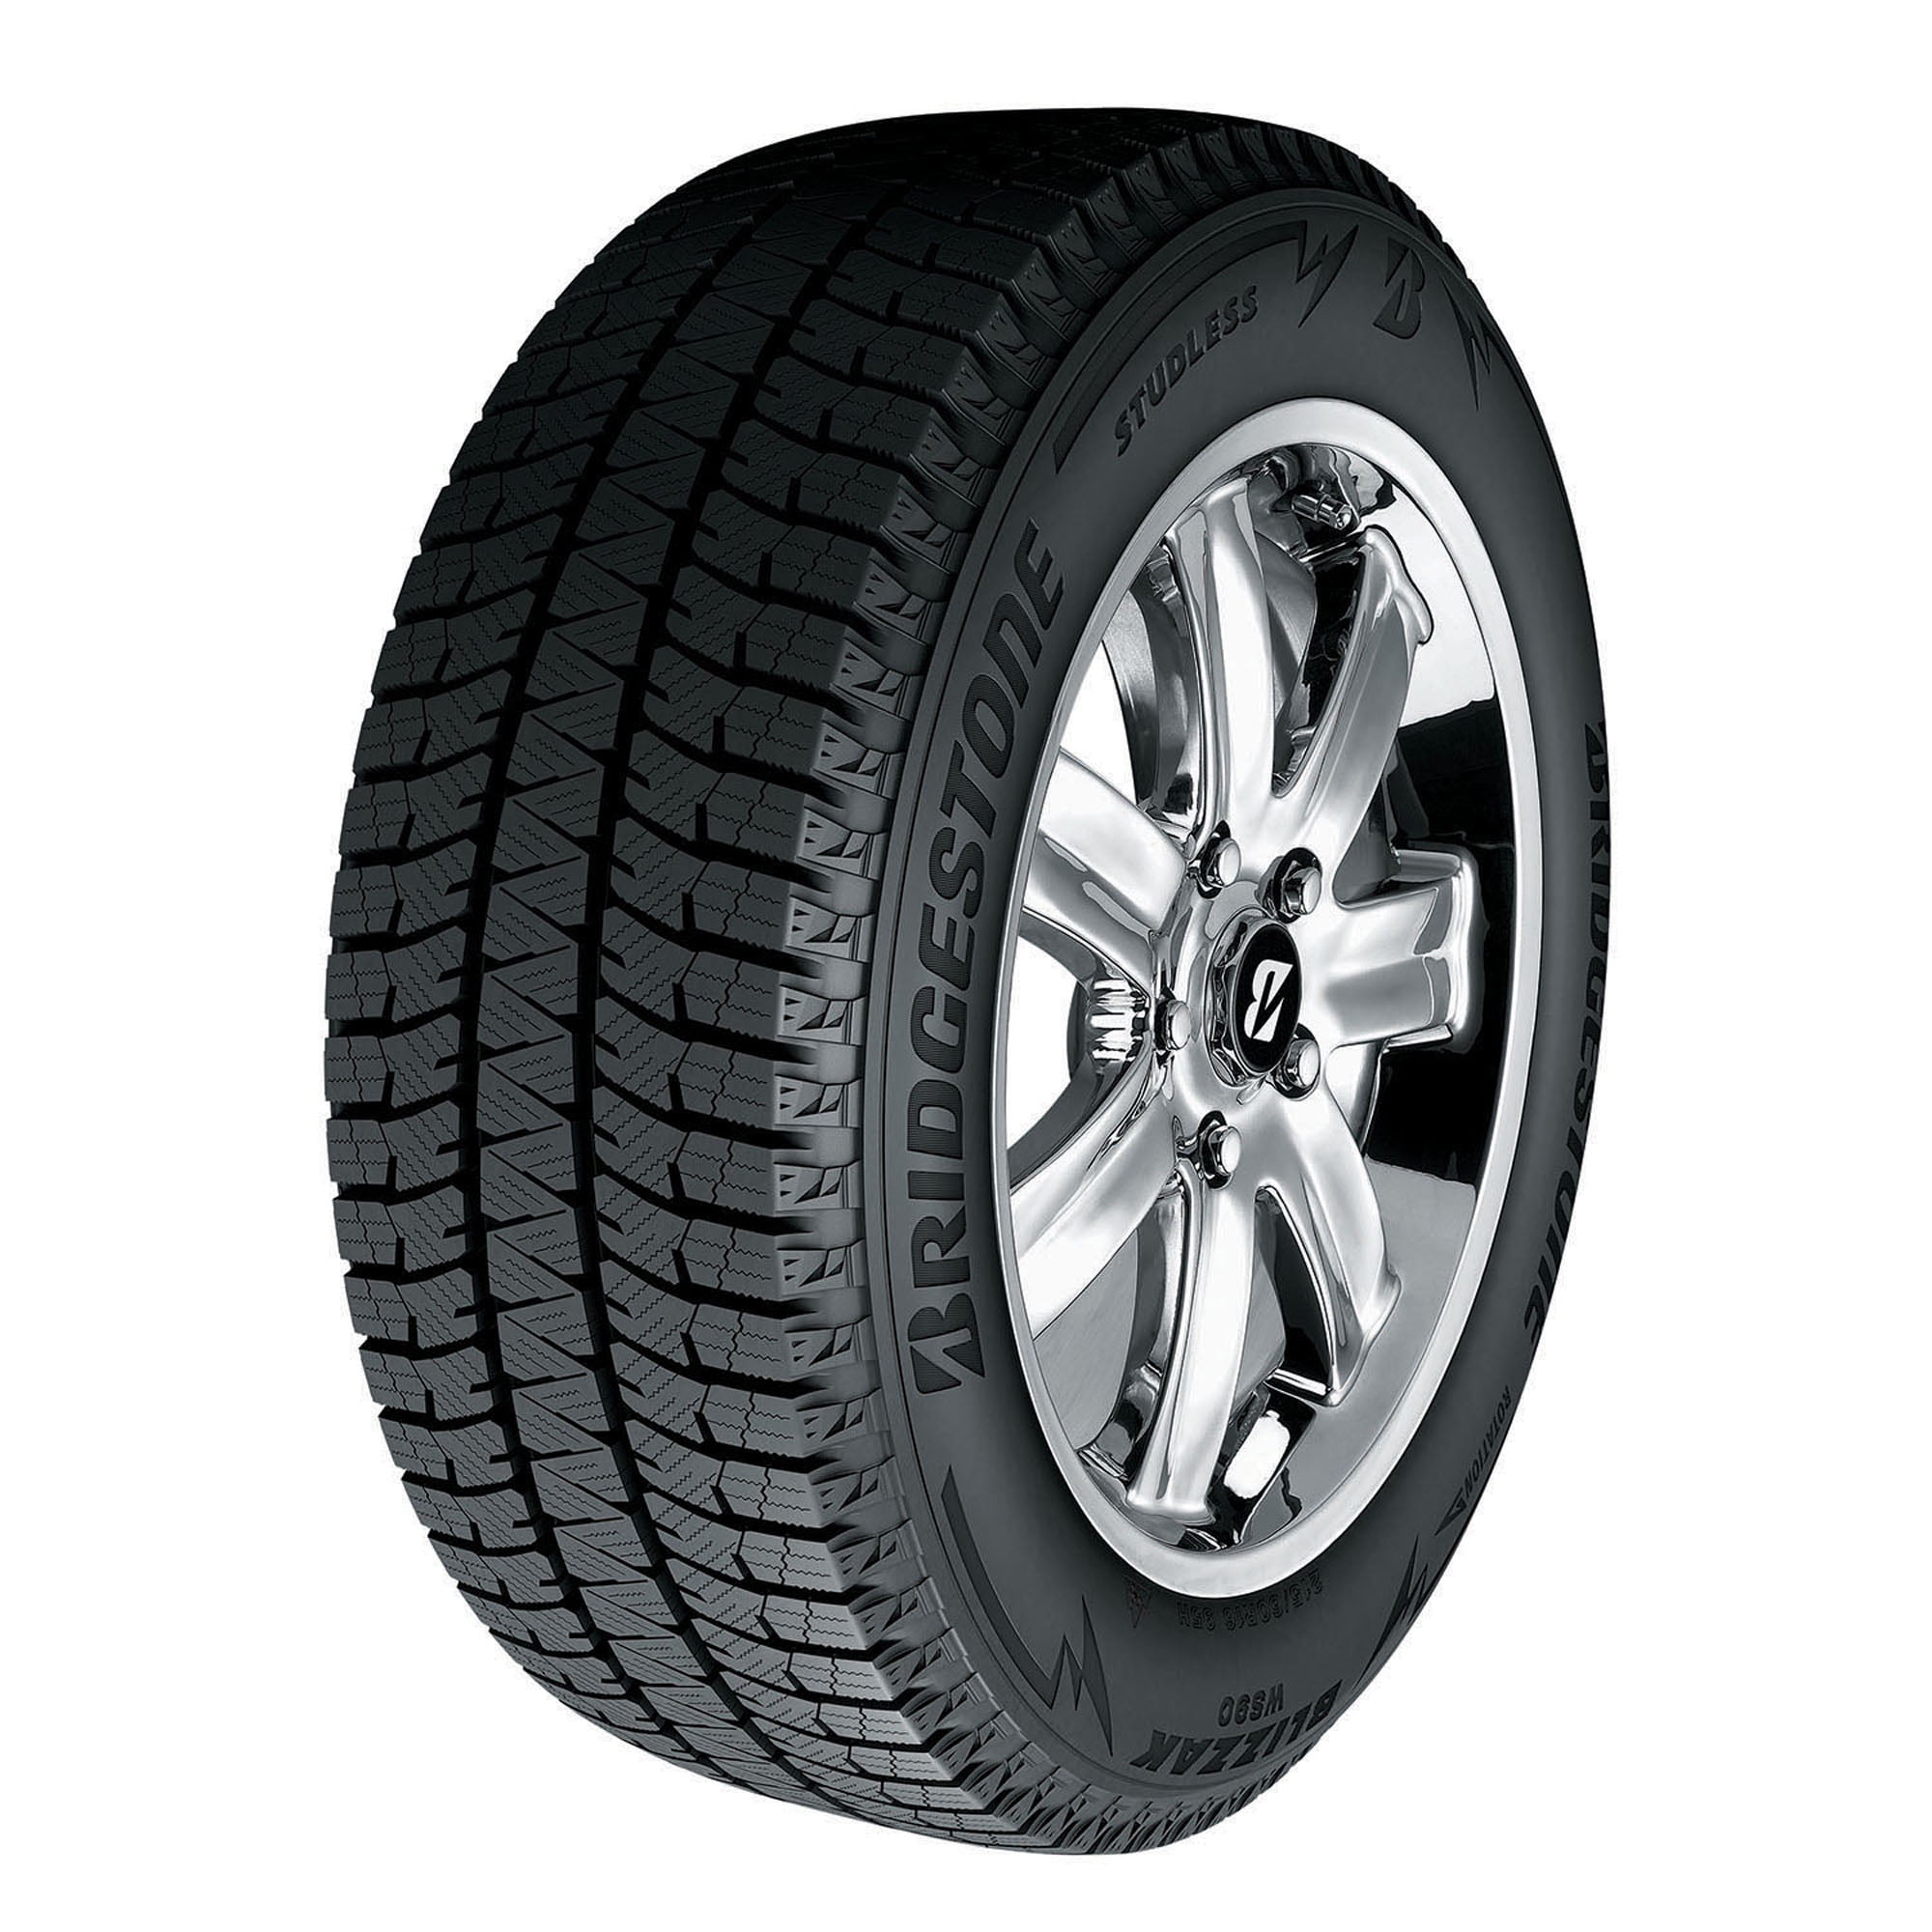 Bridgestone Blizzak WS90 Winter 245/45R17 99H XL Passenger Tire